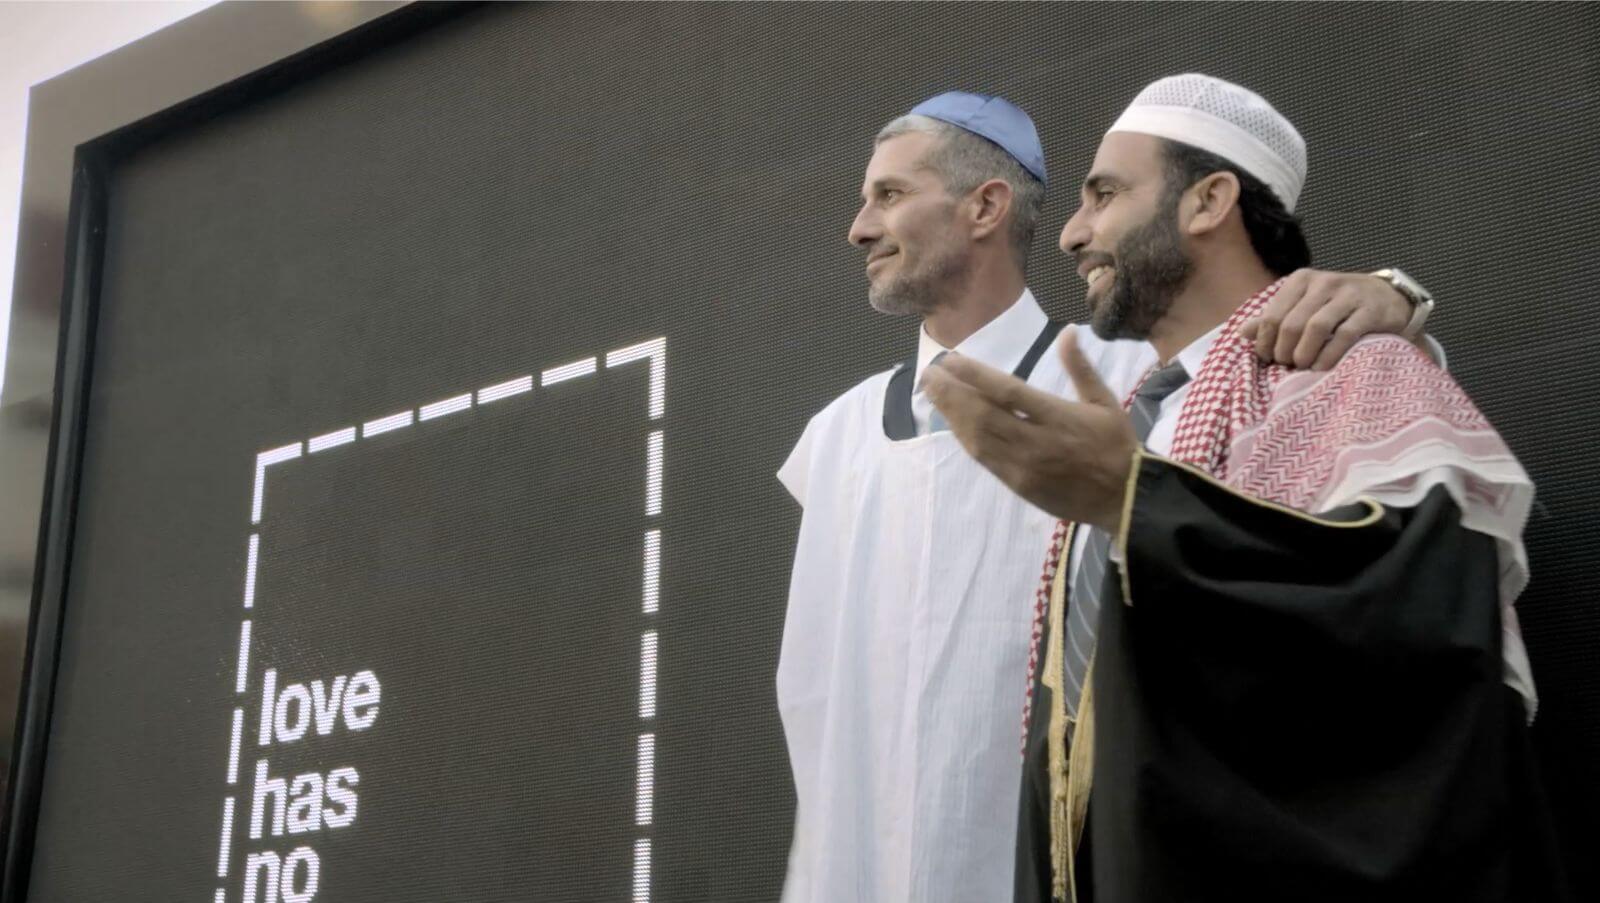 Jewish man with arm around Muslim man next to digital sign that reads 